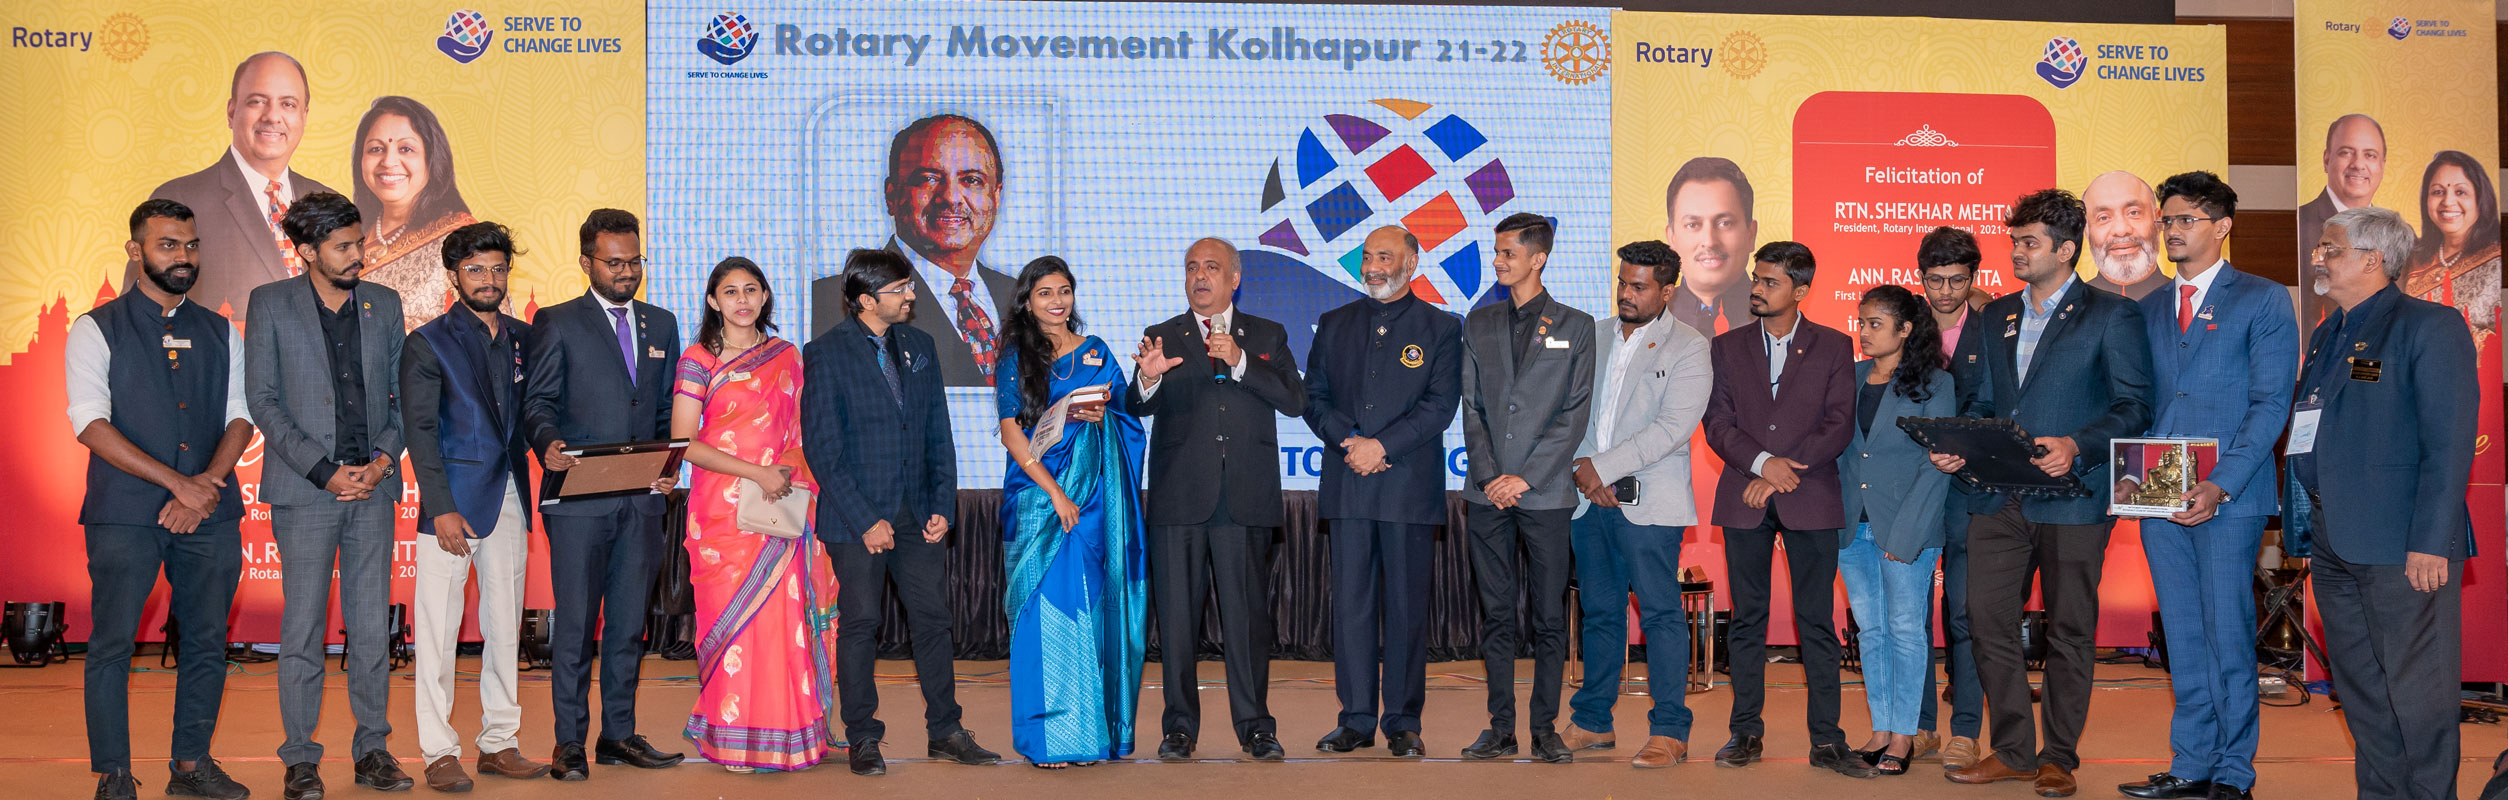 RI President Shekhar Mehta with DG Gaurish Dhond (on his left), DRR Vishakha Pednekar (on his right) and Rotaractors at an event in Kolhapur. 